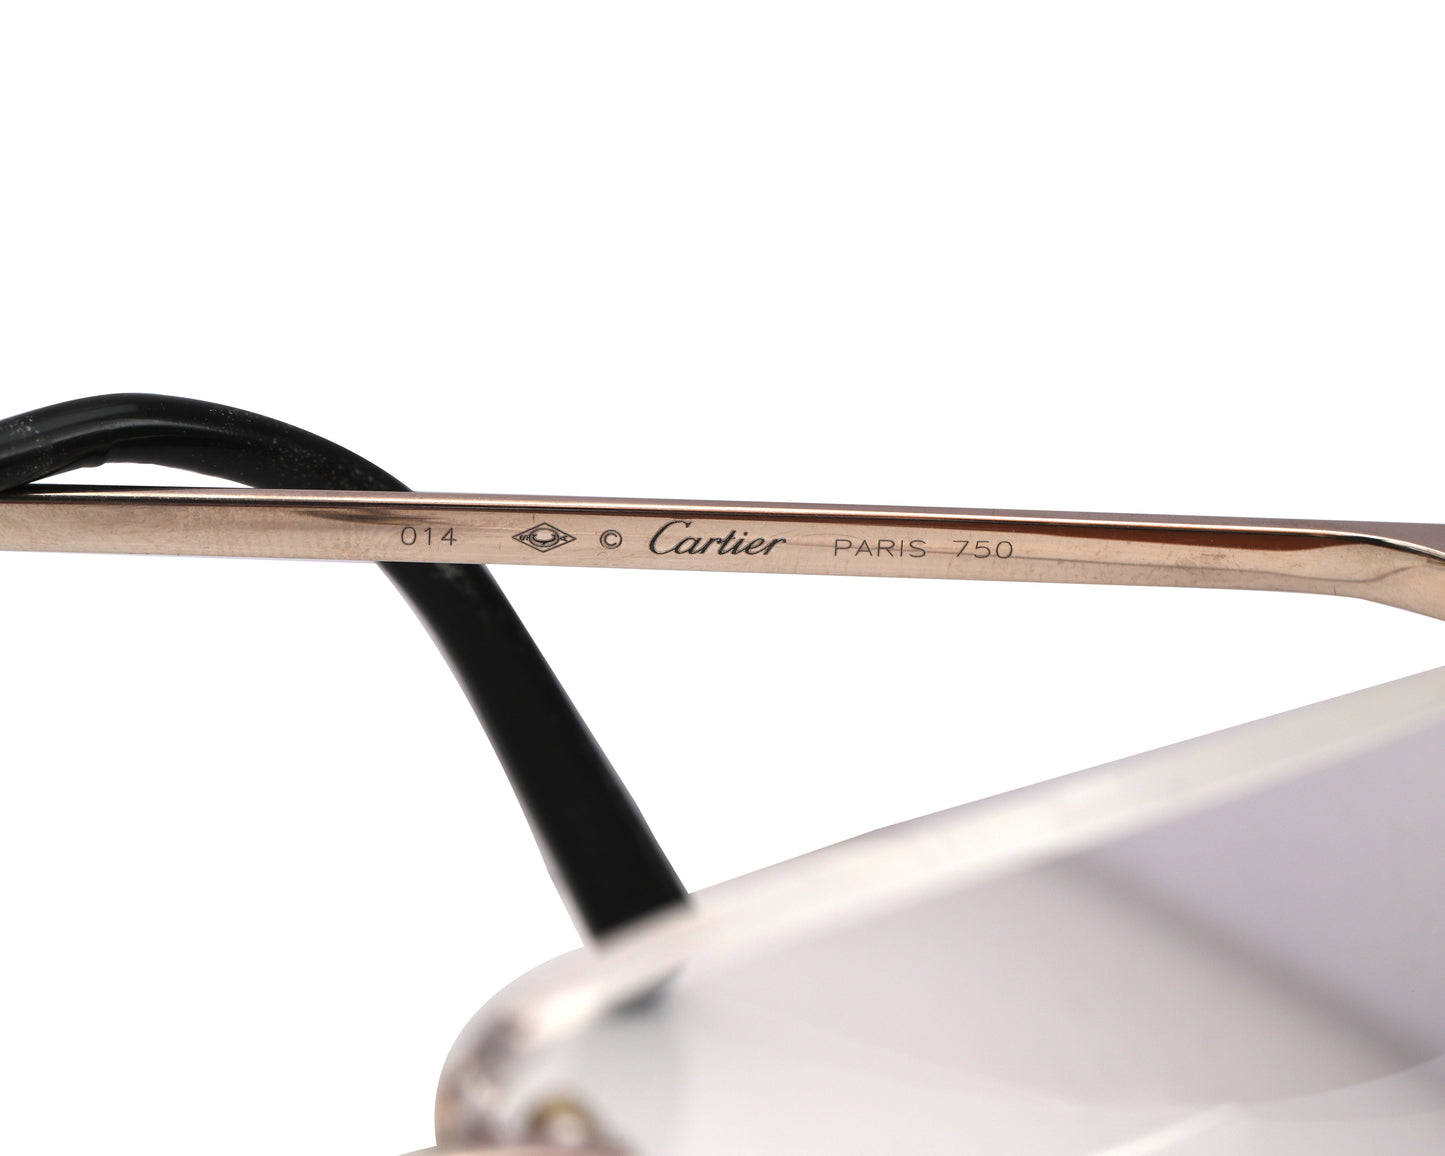 Cartier 18kt White Gold Rimless Glasses